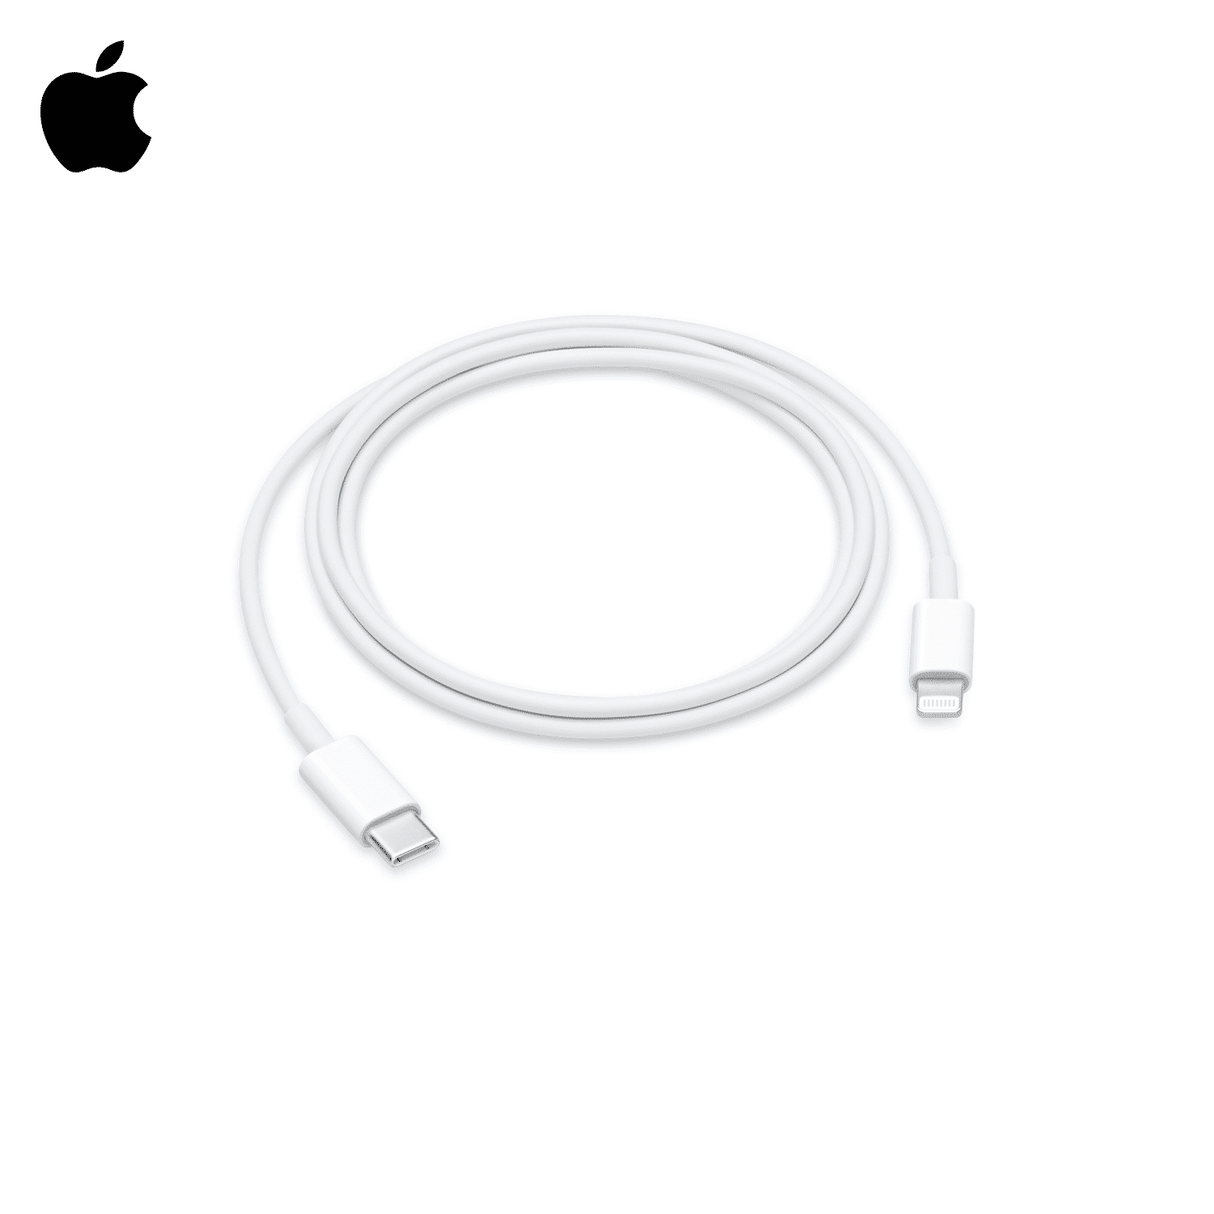 Cable Apple USB-C Lightning (1m) – RYM Portátiles Perú